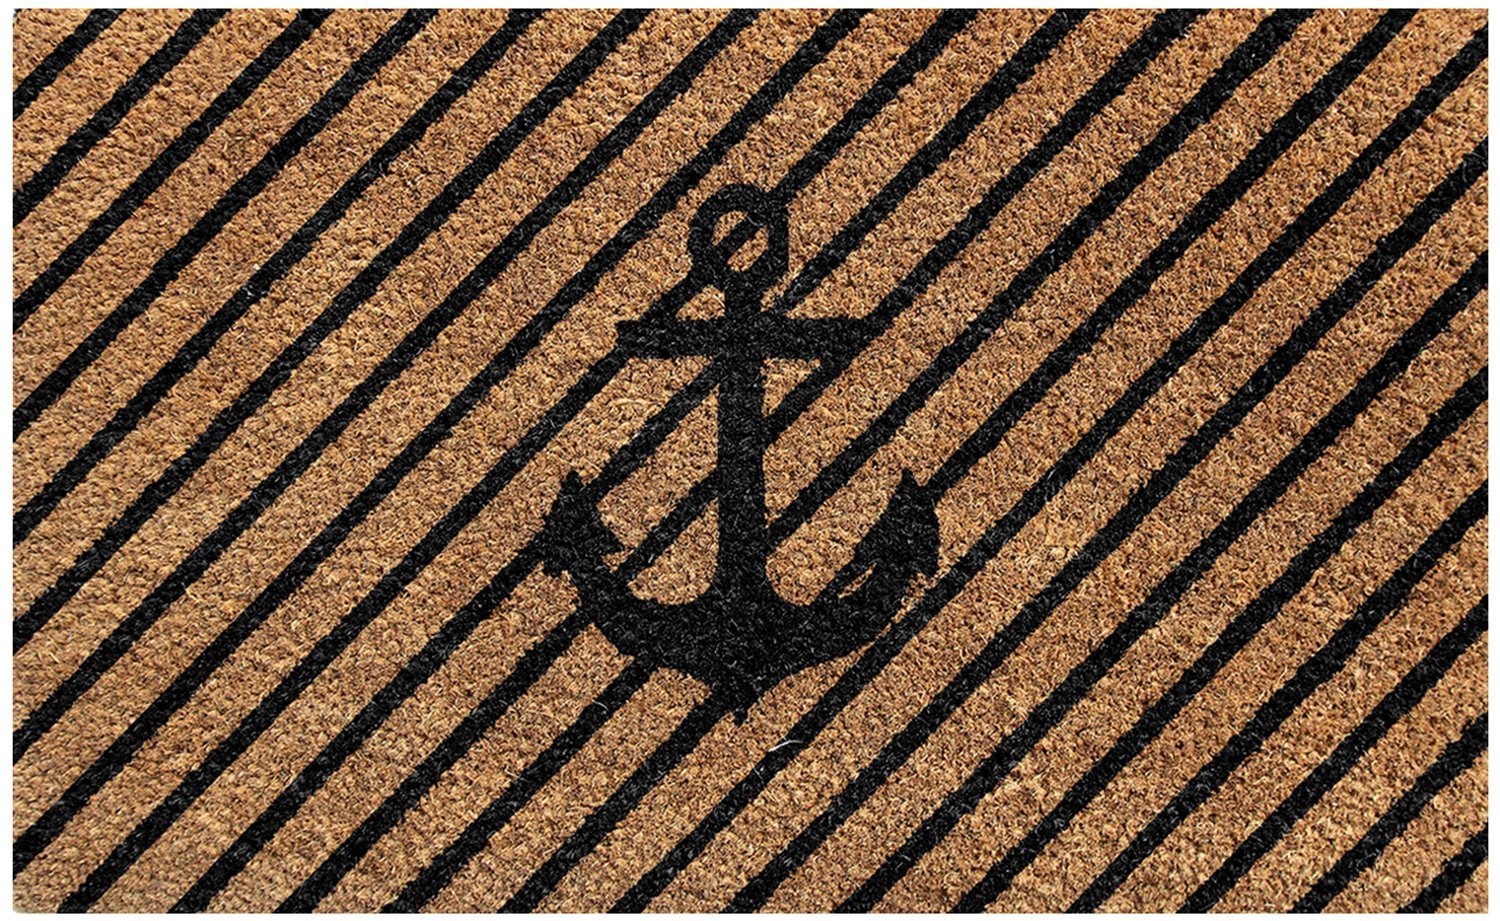 Elegant Black Ship Anchor Printed Striped Natural Coir Floor Mat - OnlyMat